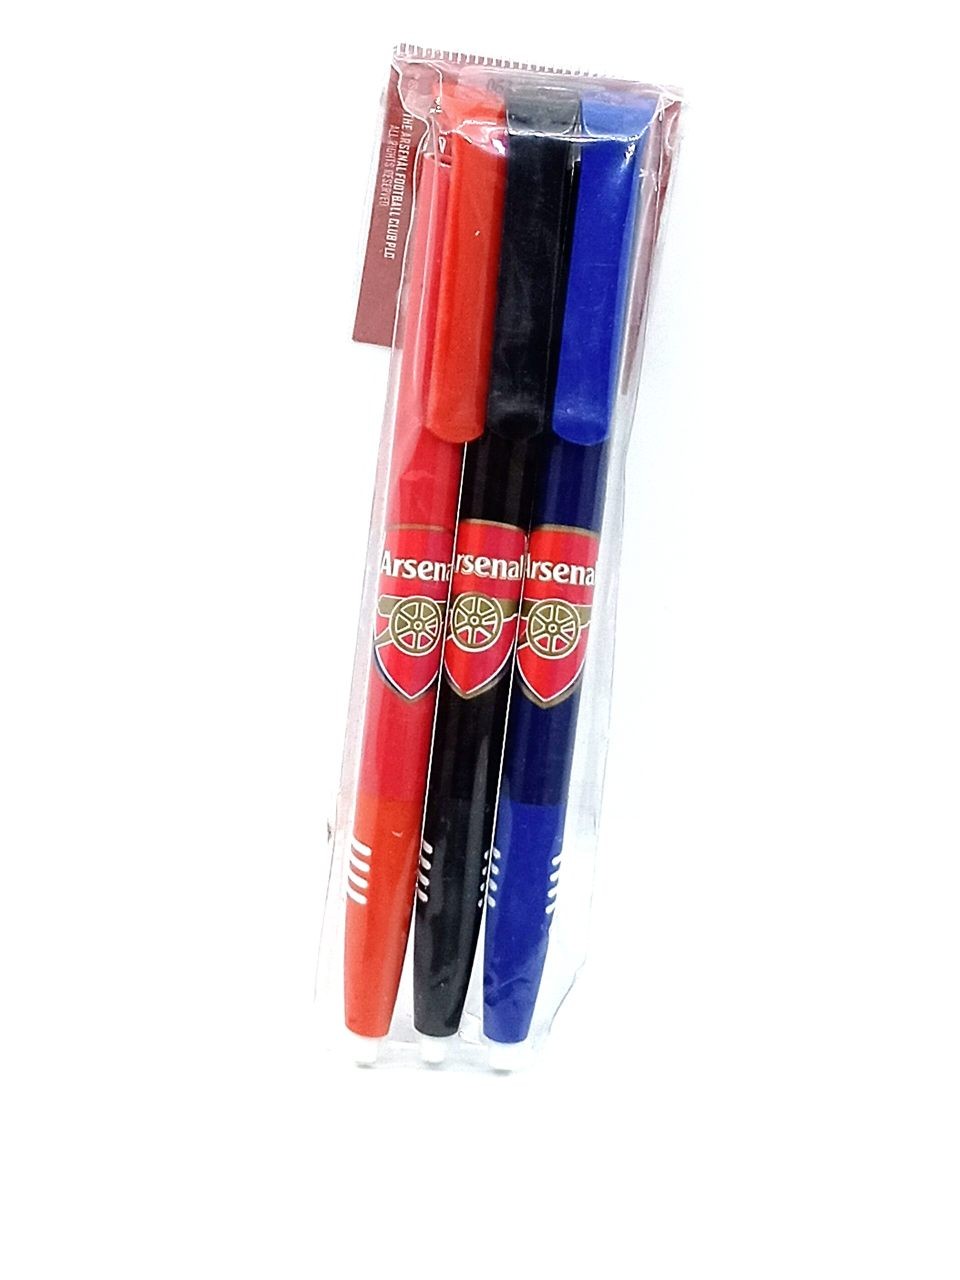 Arsenal pen set